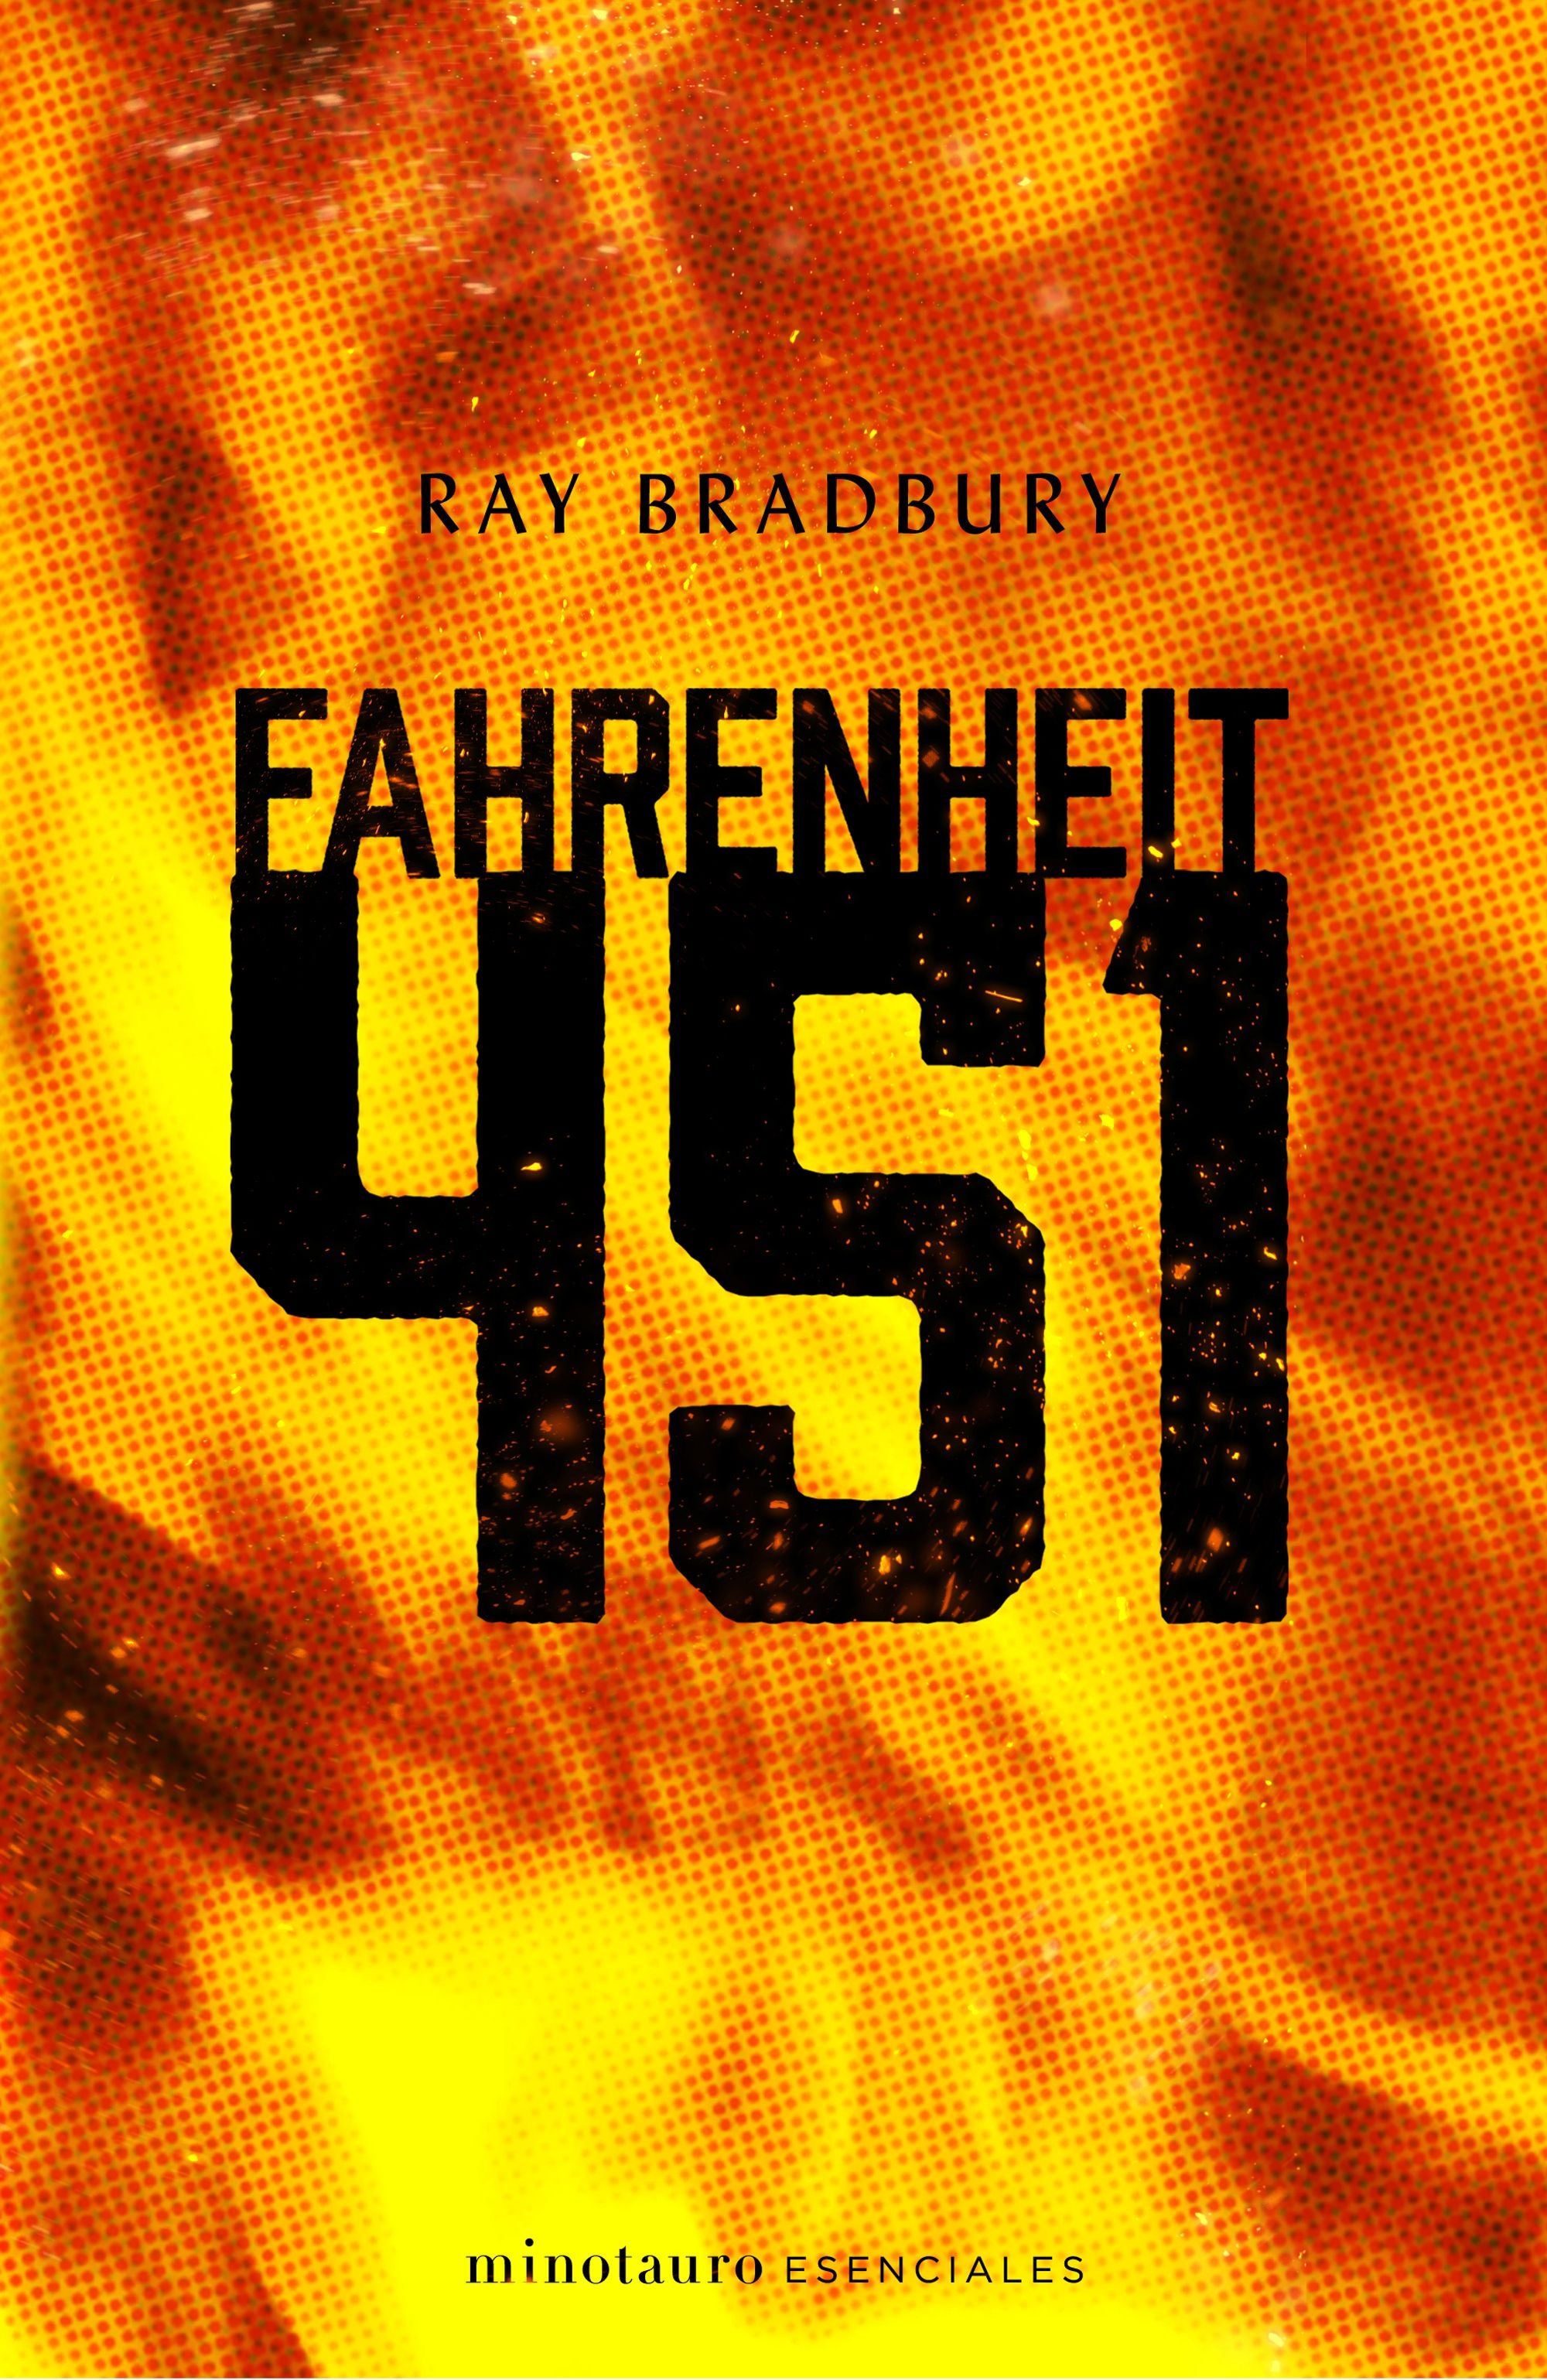 Libro Ray Bradbury - Fahrenheit 451